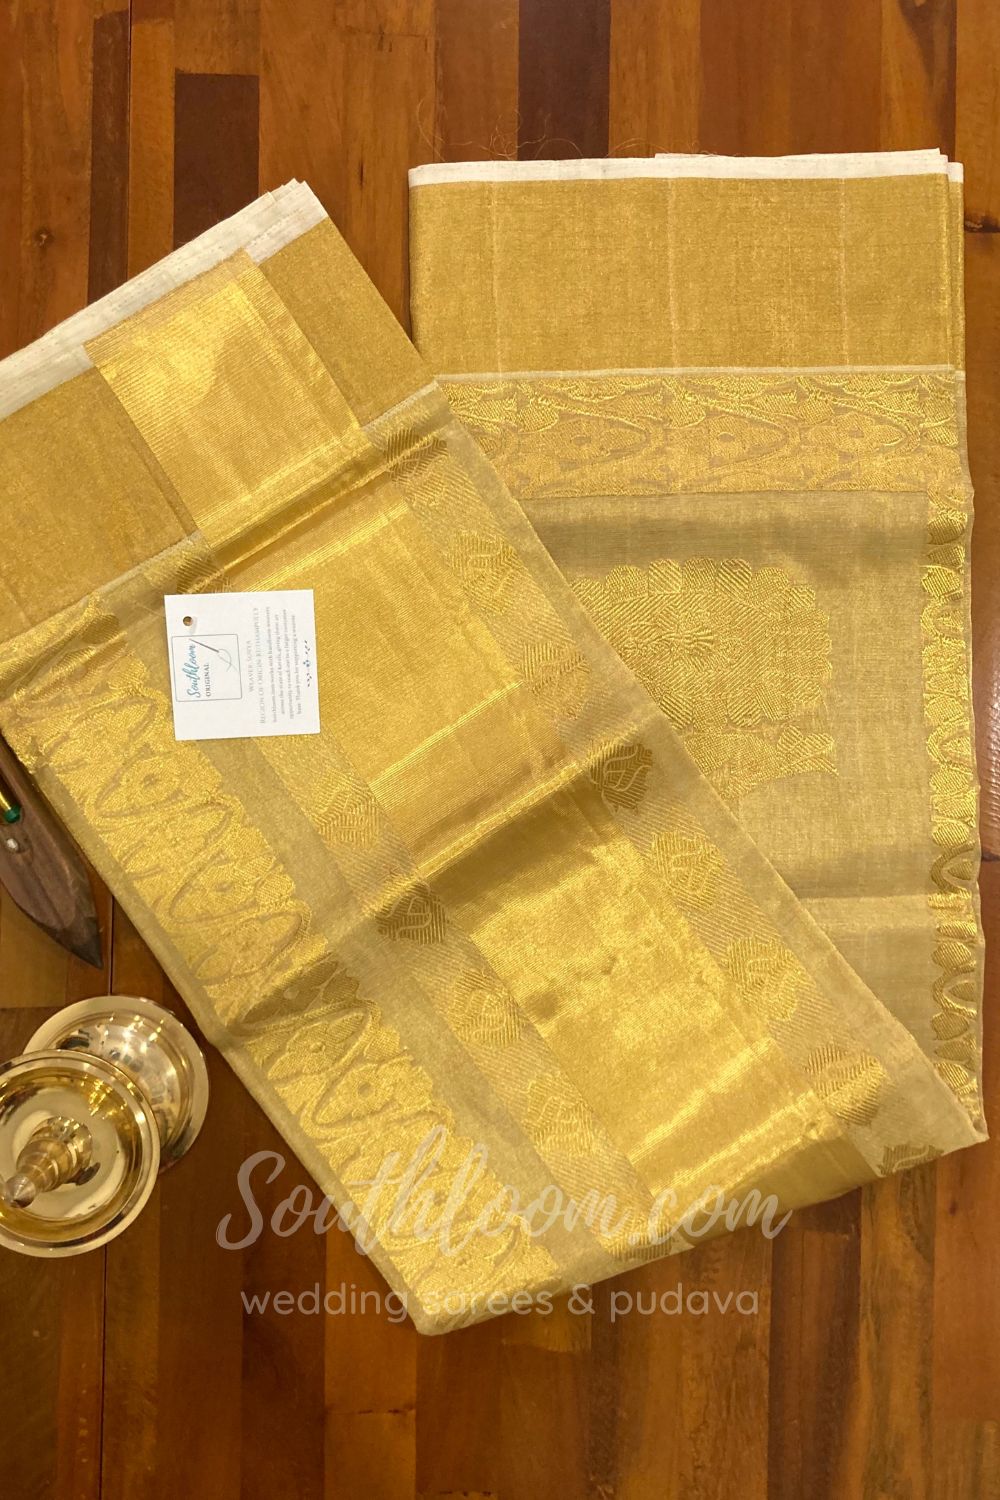 Southloom™ Original Handloom Full Kasavu Saree with Handwoven Work Across Body and Pallu (Not a Tissue Saree)